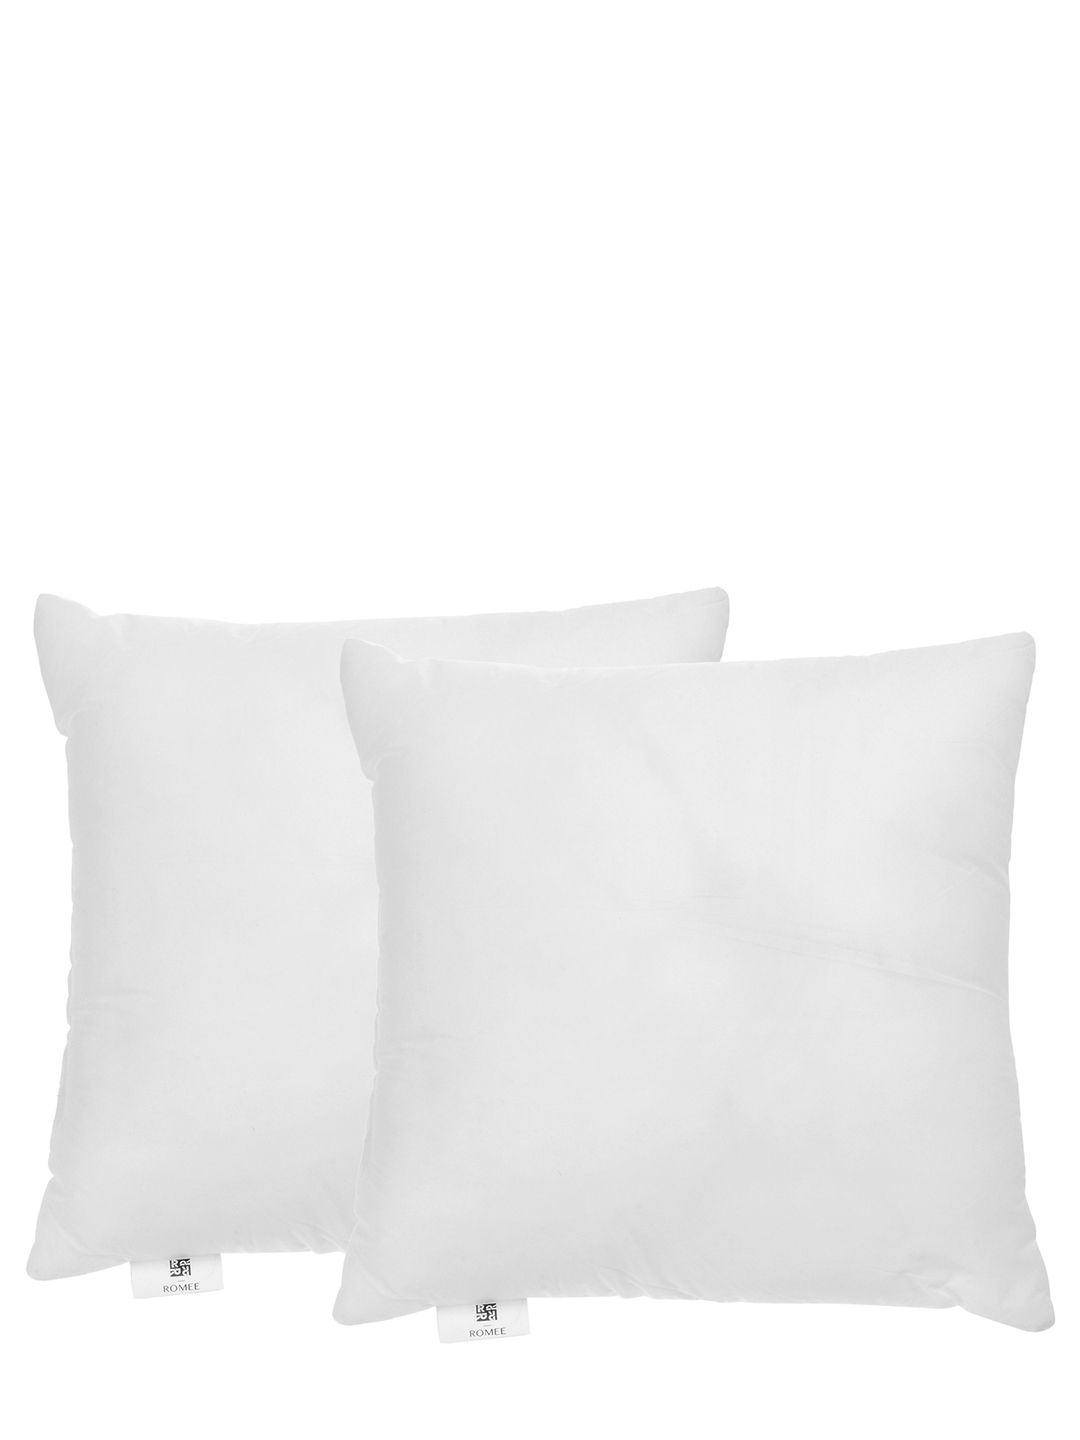 ROMEE Set of 2 White Single Fibre 16" x 16" Square Cushions Price in India